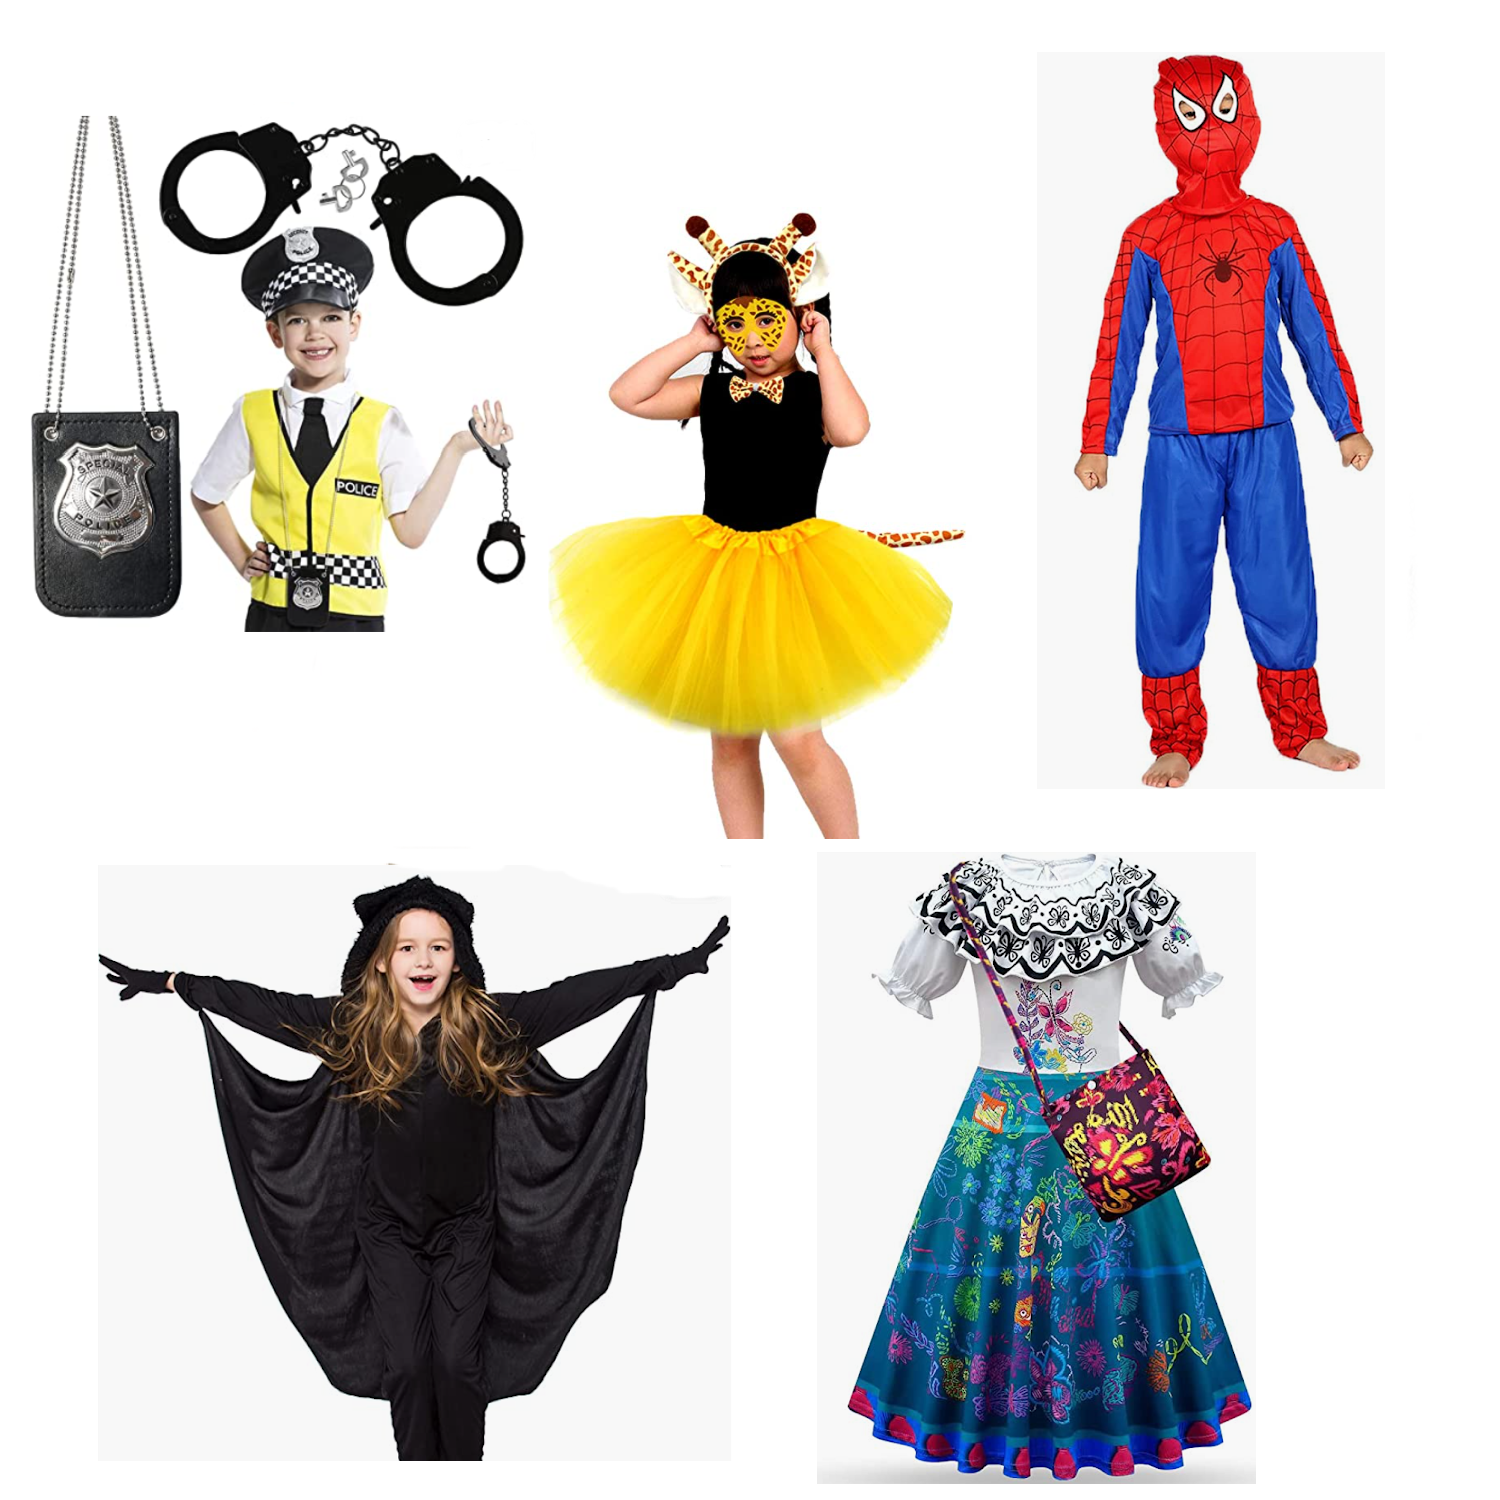 5 Halloween costumes - police officer's costume, giraffe, spiderman, bat's costumer and Mirabel costume.